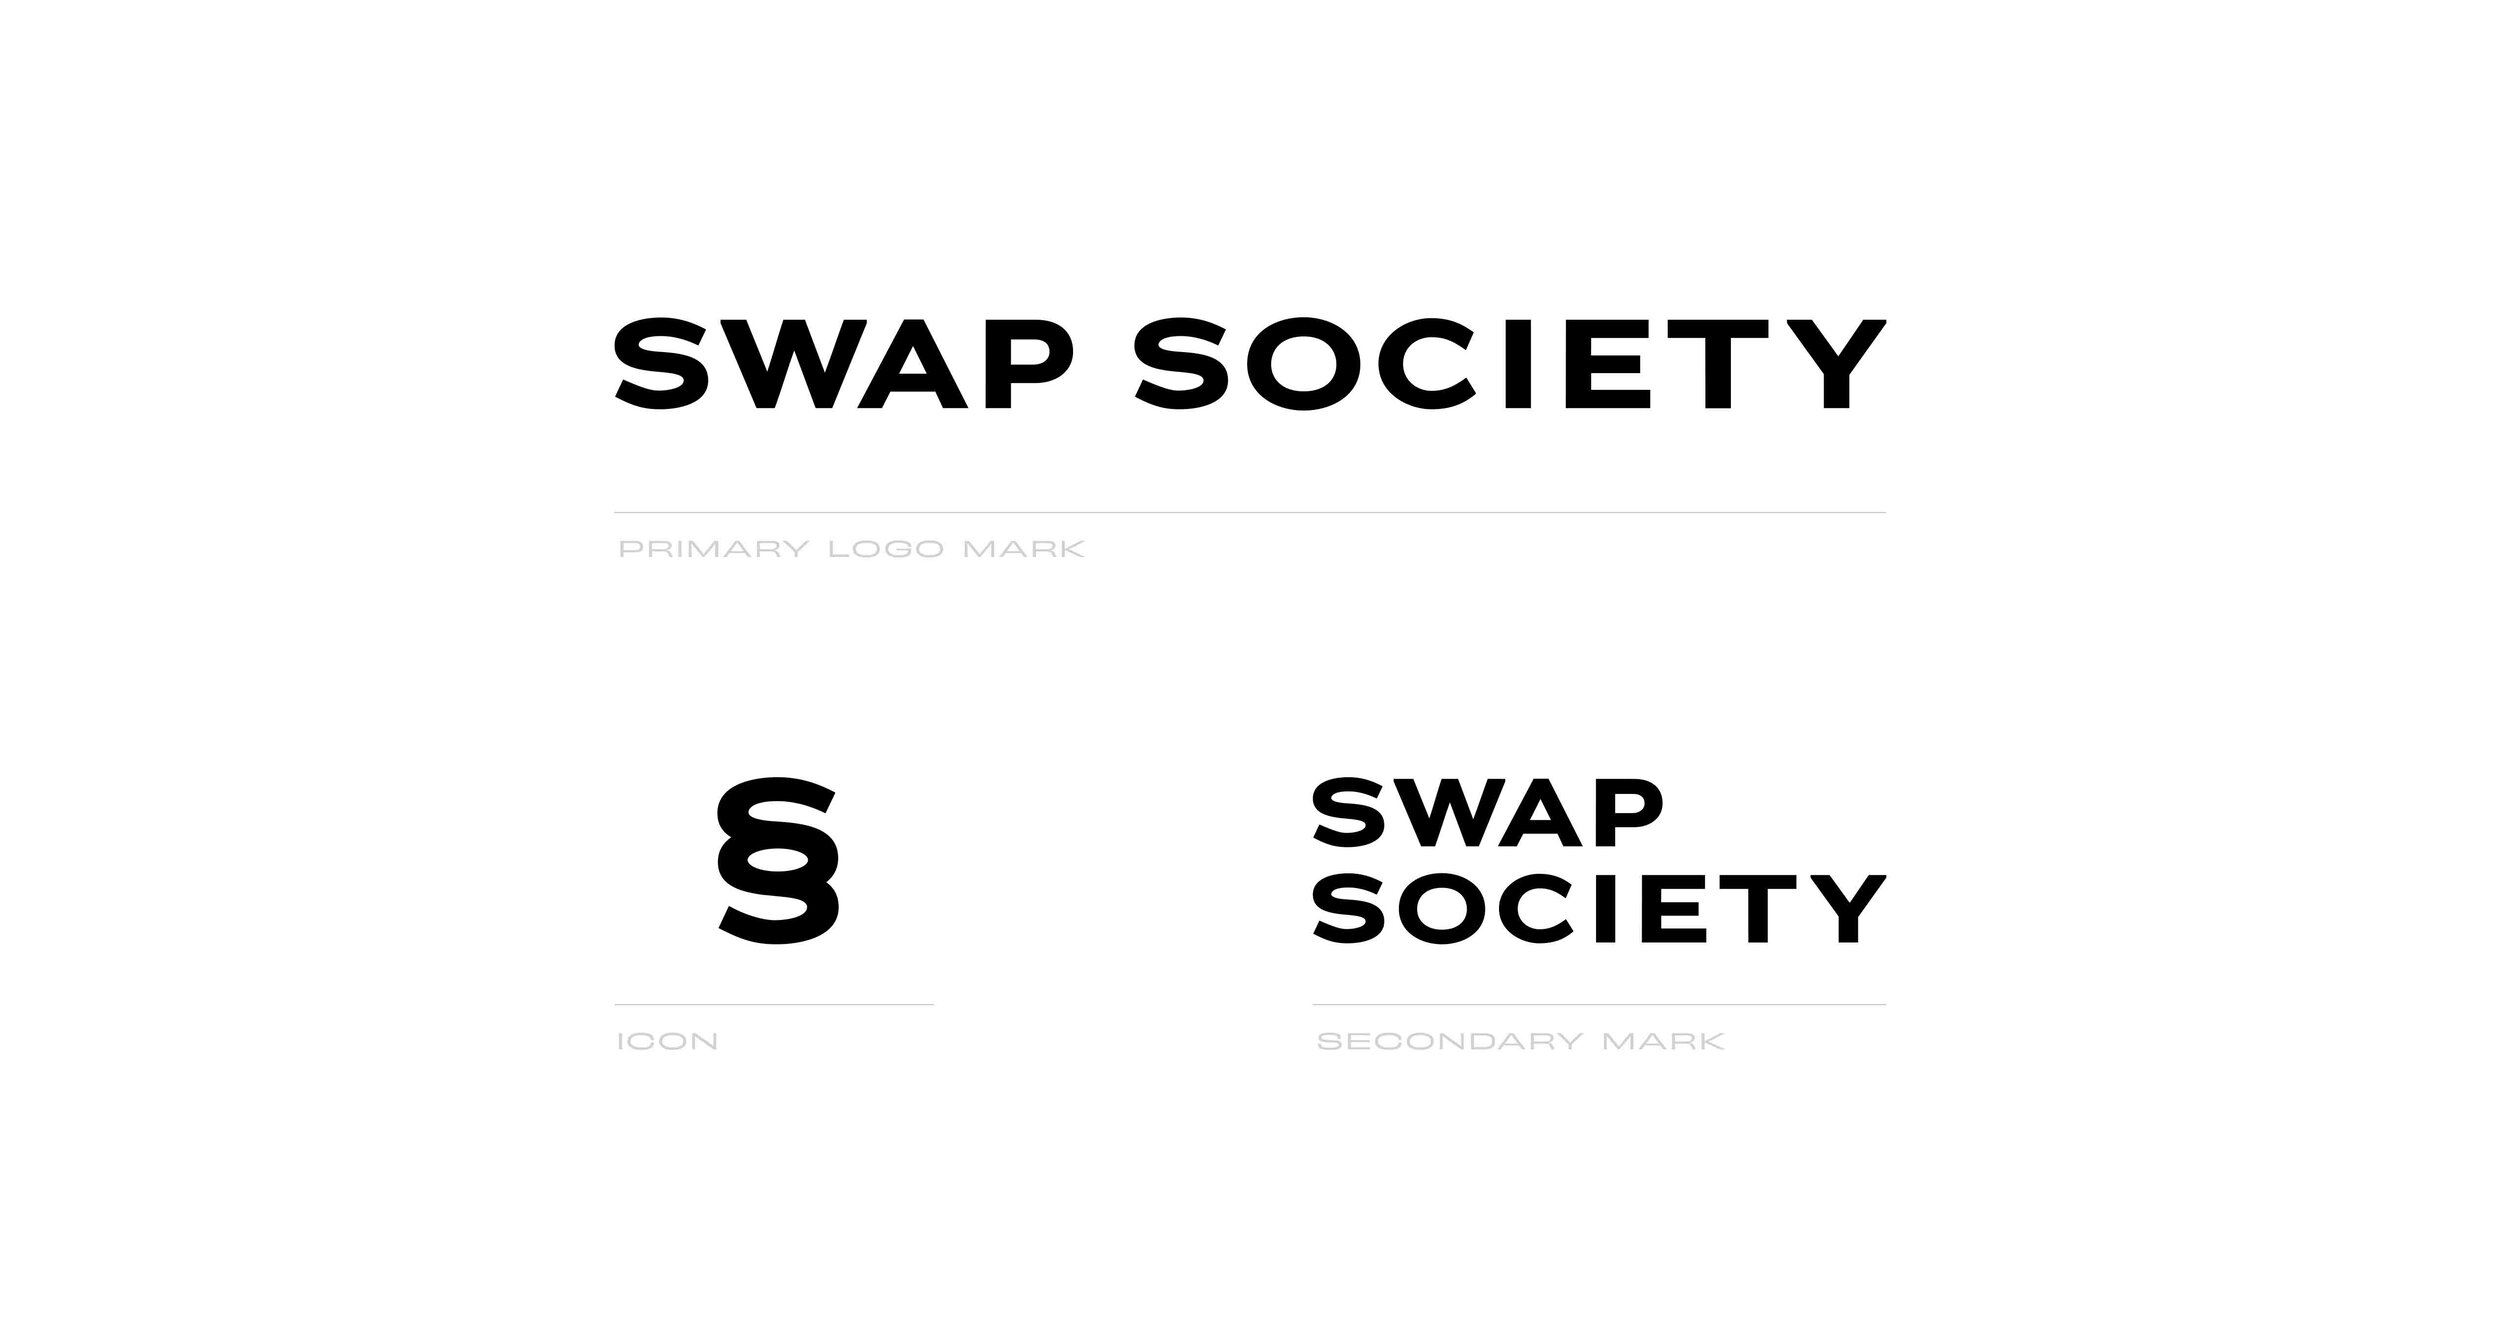 Swap-Society_Edited_Logos.jpg